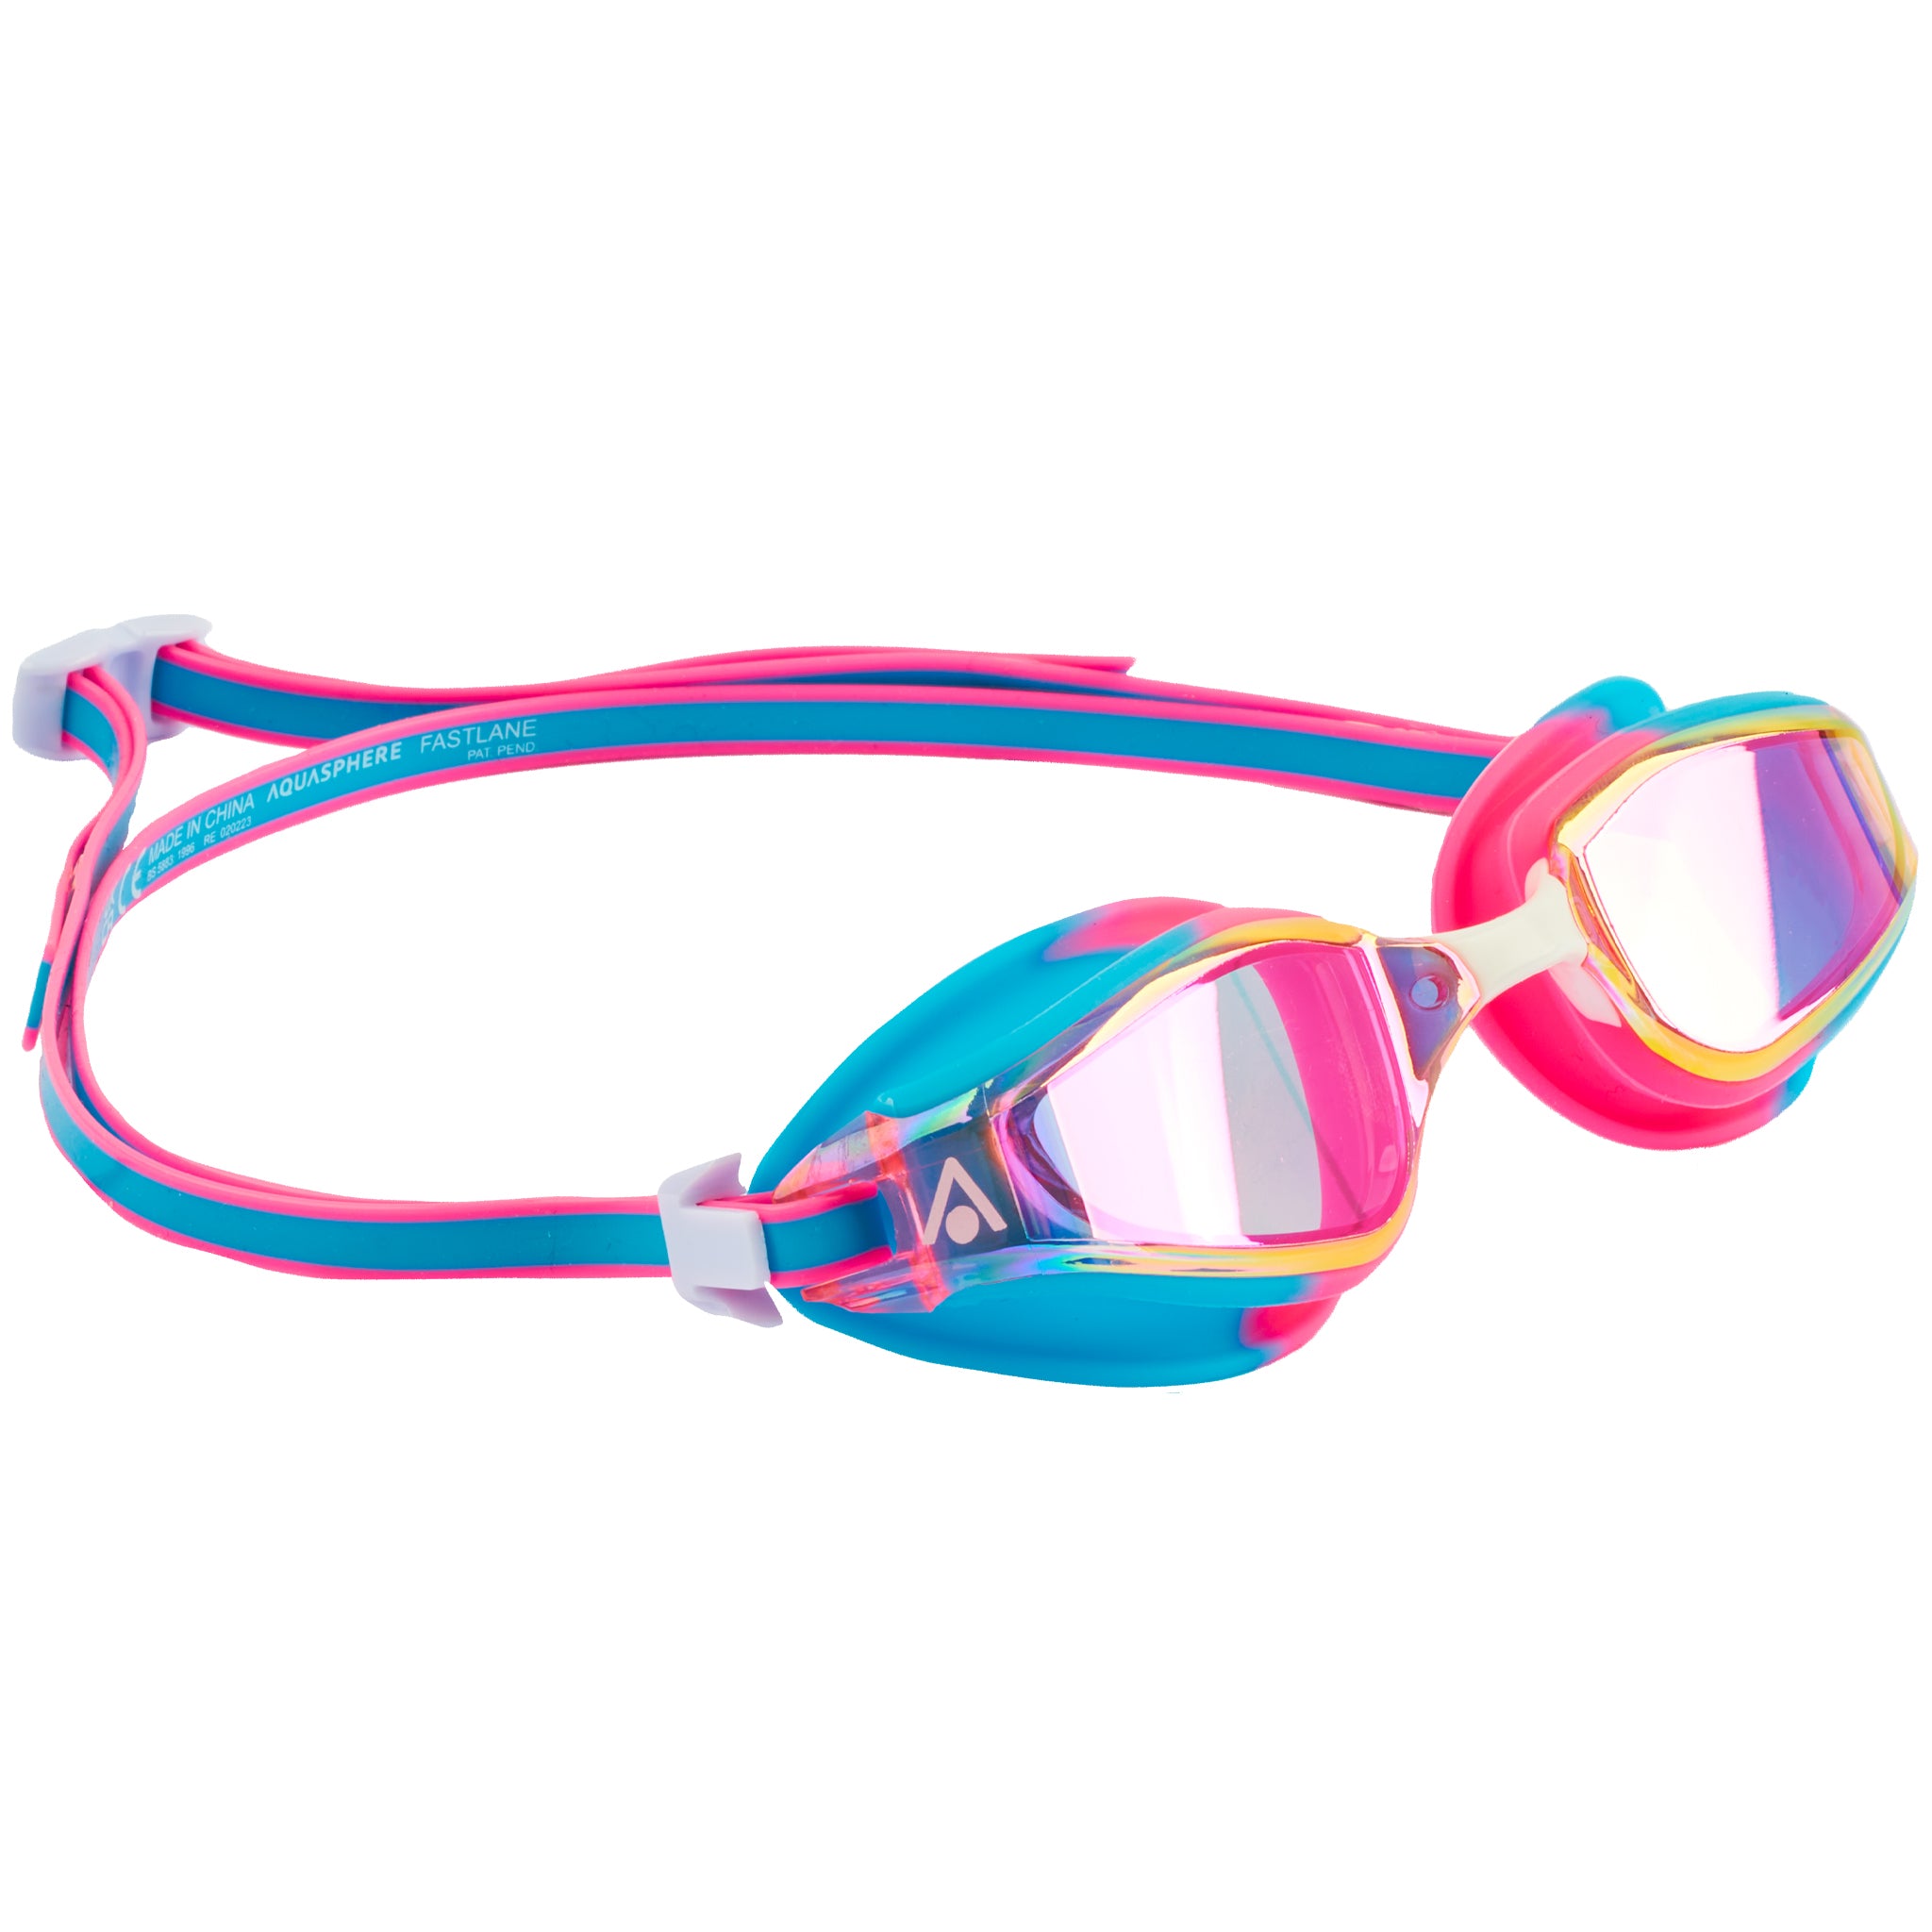 Aquasphere Fastlane Goggles LTD EDITION Pink Iridescent Mirrored Lenses Look Right